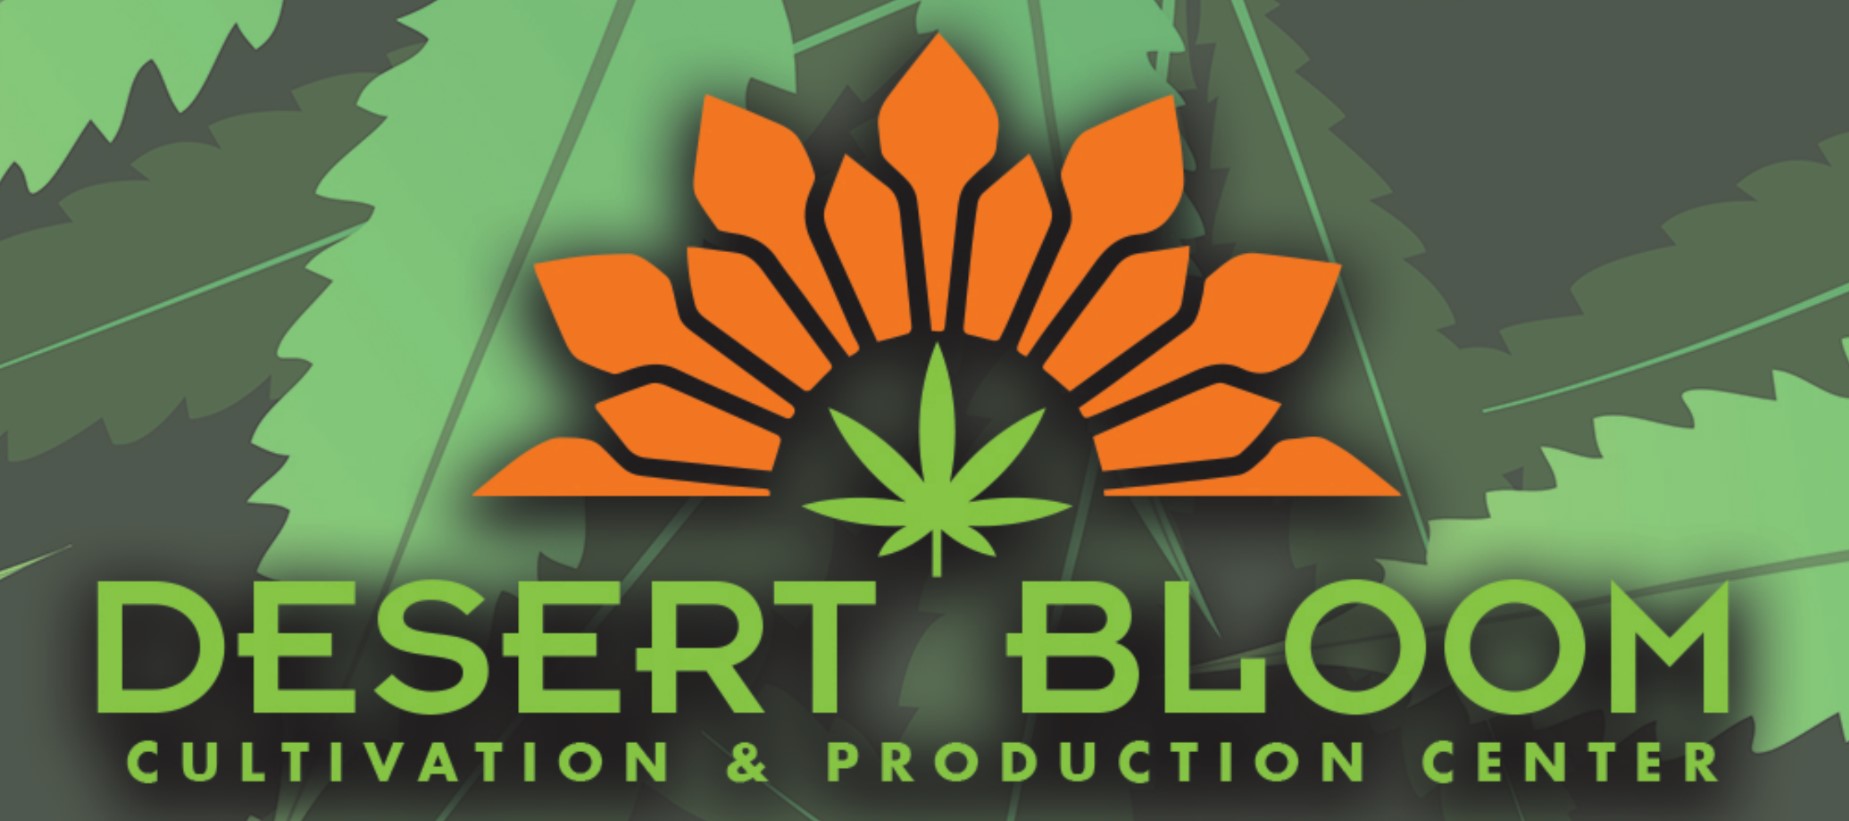 Desert Bloom logo. Click to view website.